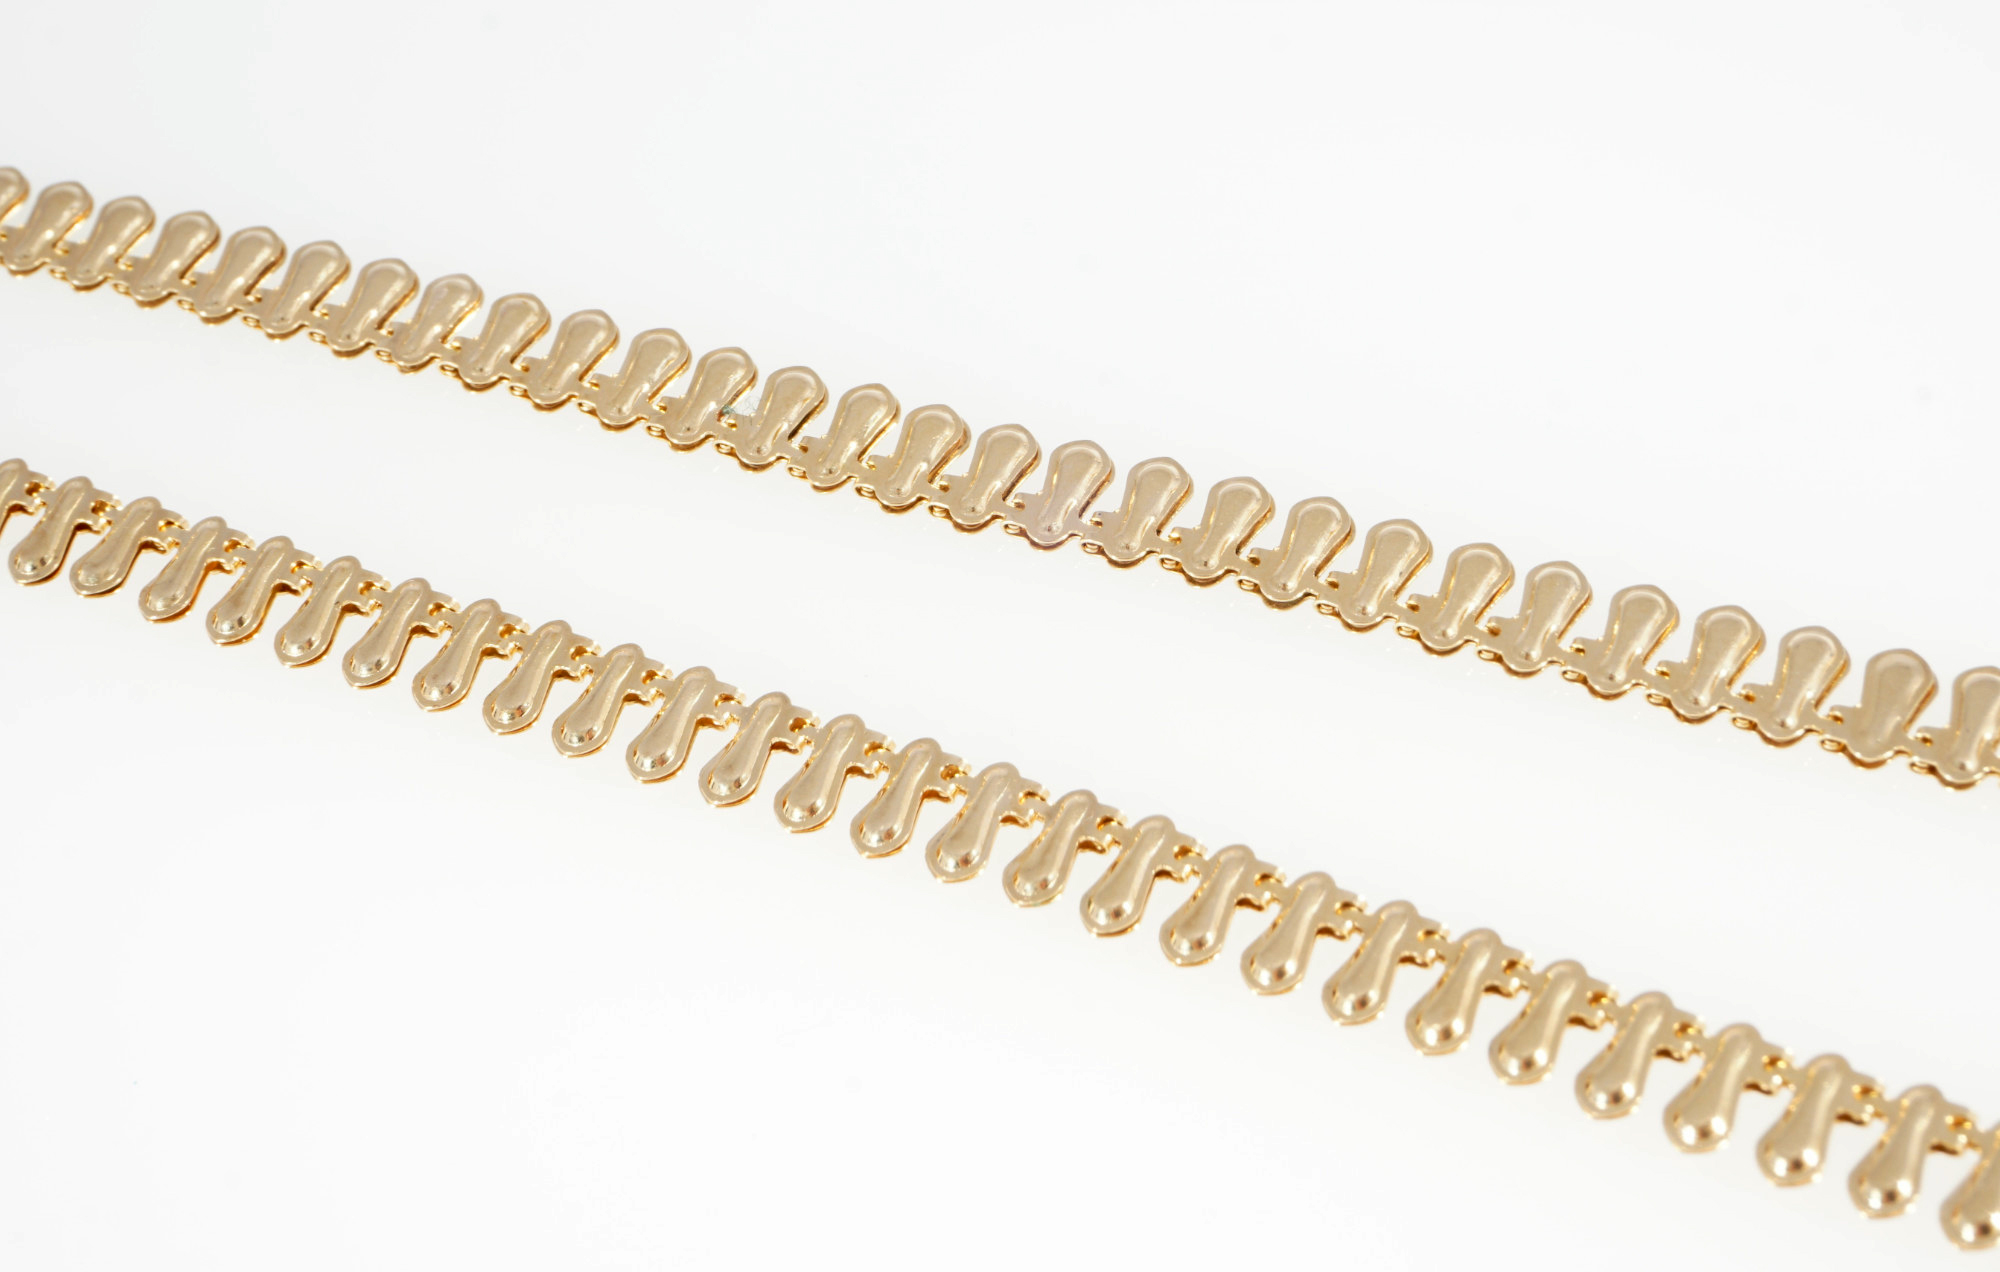 750 gold necklace in drop shape, 18K Gold Collier / Halskette in Tropenform,